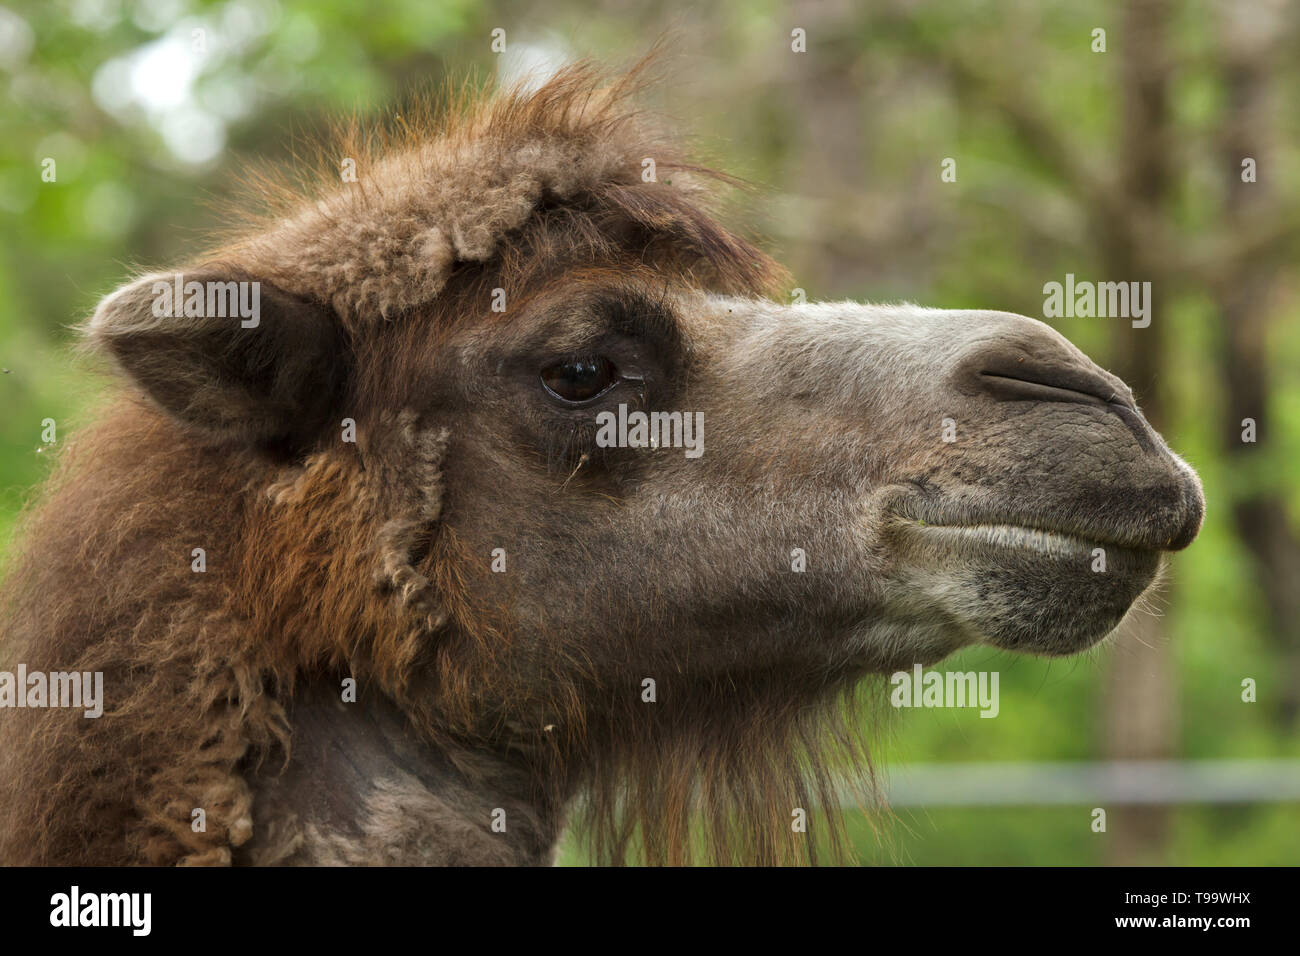 Camello bactriano (Camelus bactrianus). Animal domesticado. Foto de stock